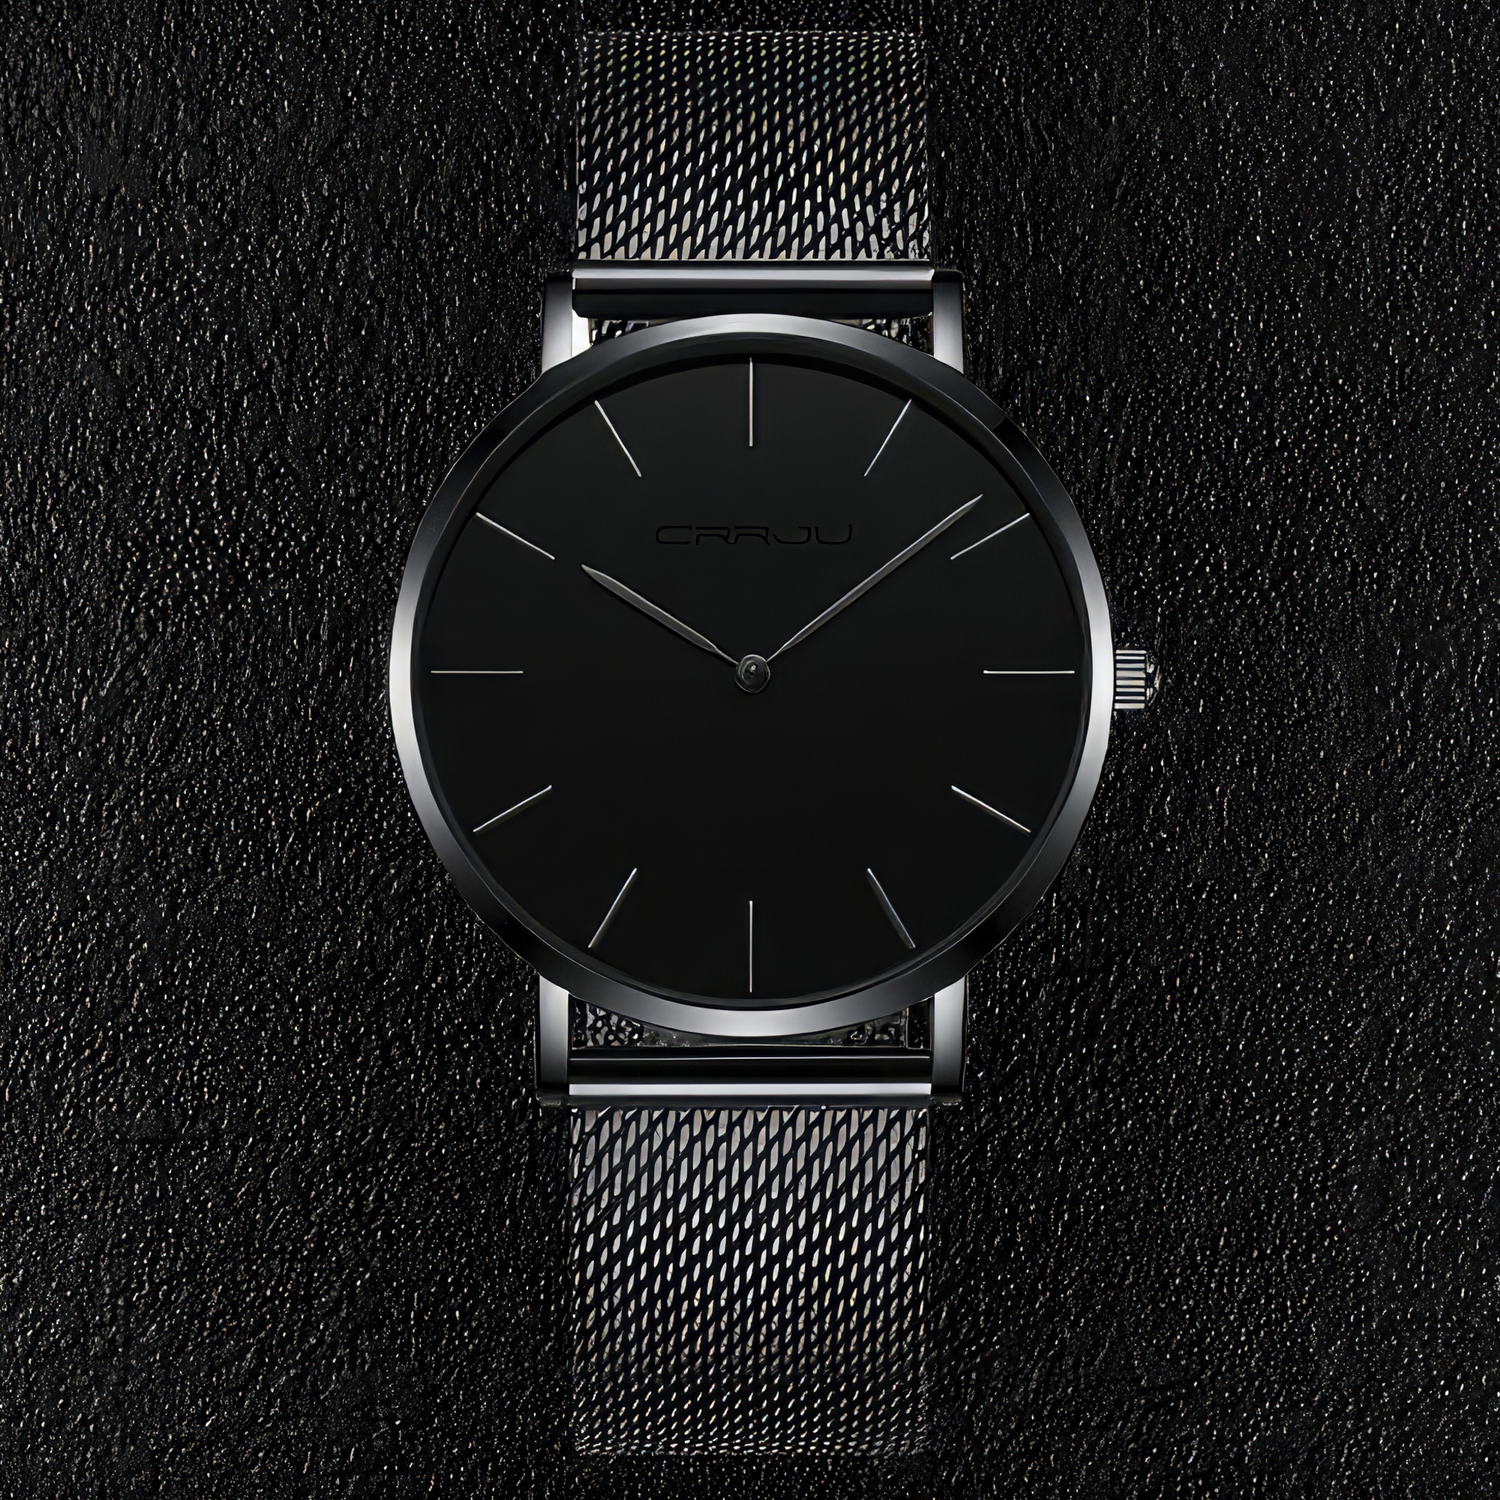 Stylish all black men's watch.